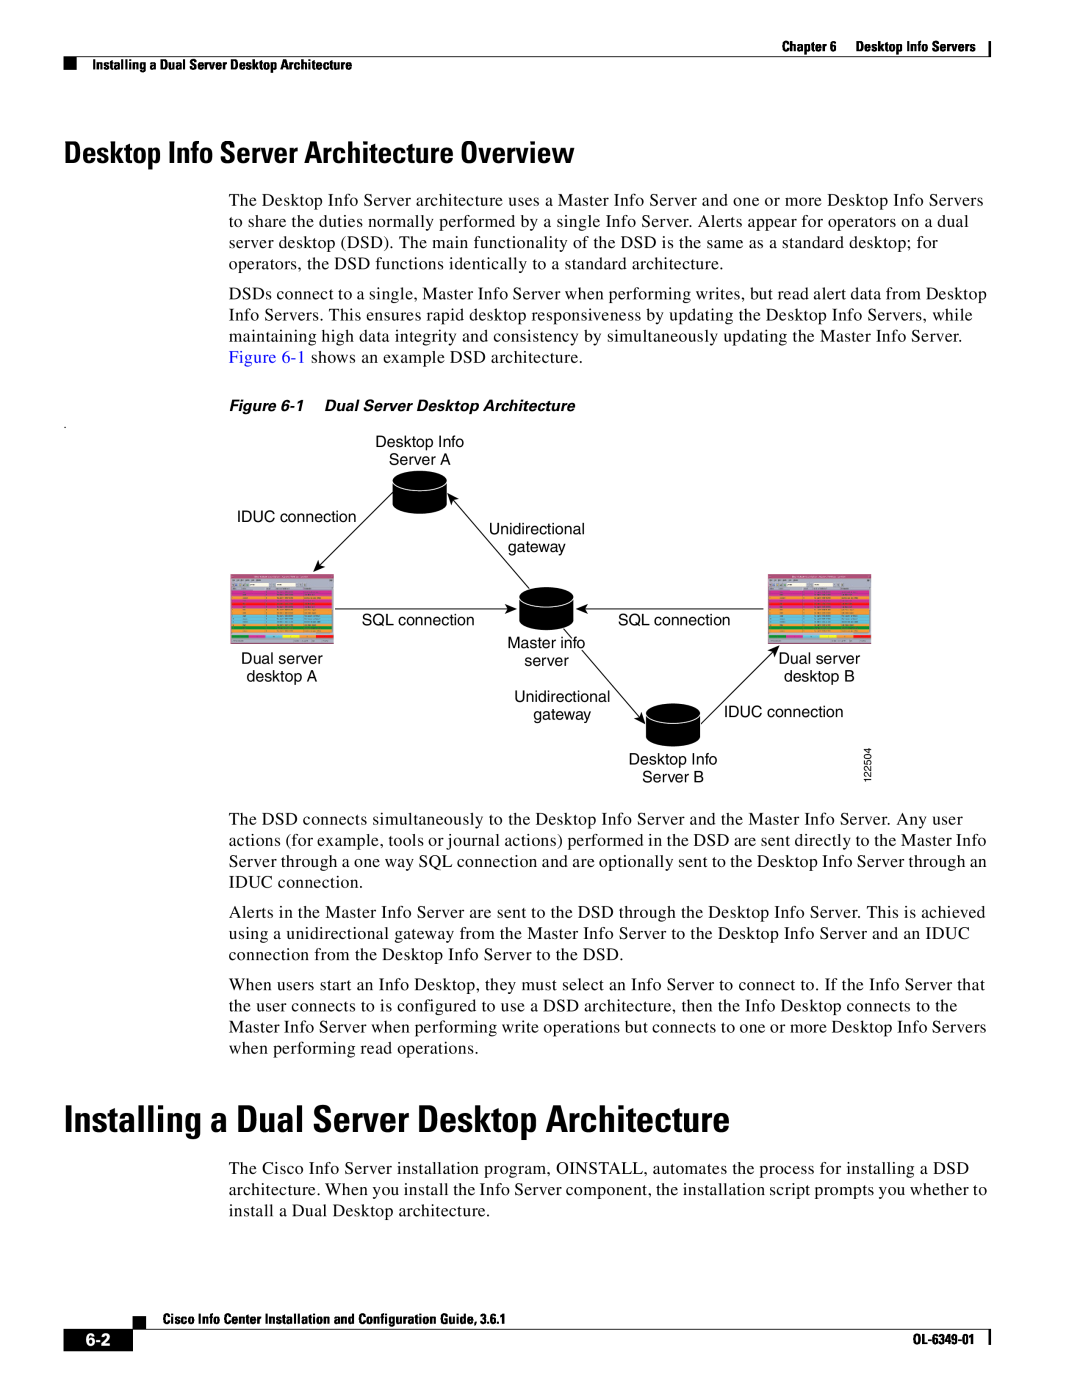 Cisco Systems OL-6349-01 manual Installing a Dual Server Desktop Architecture, Desktop Info Server Architecture Overview 